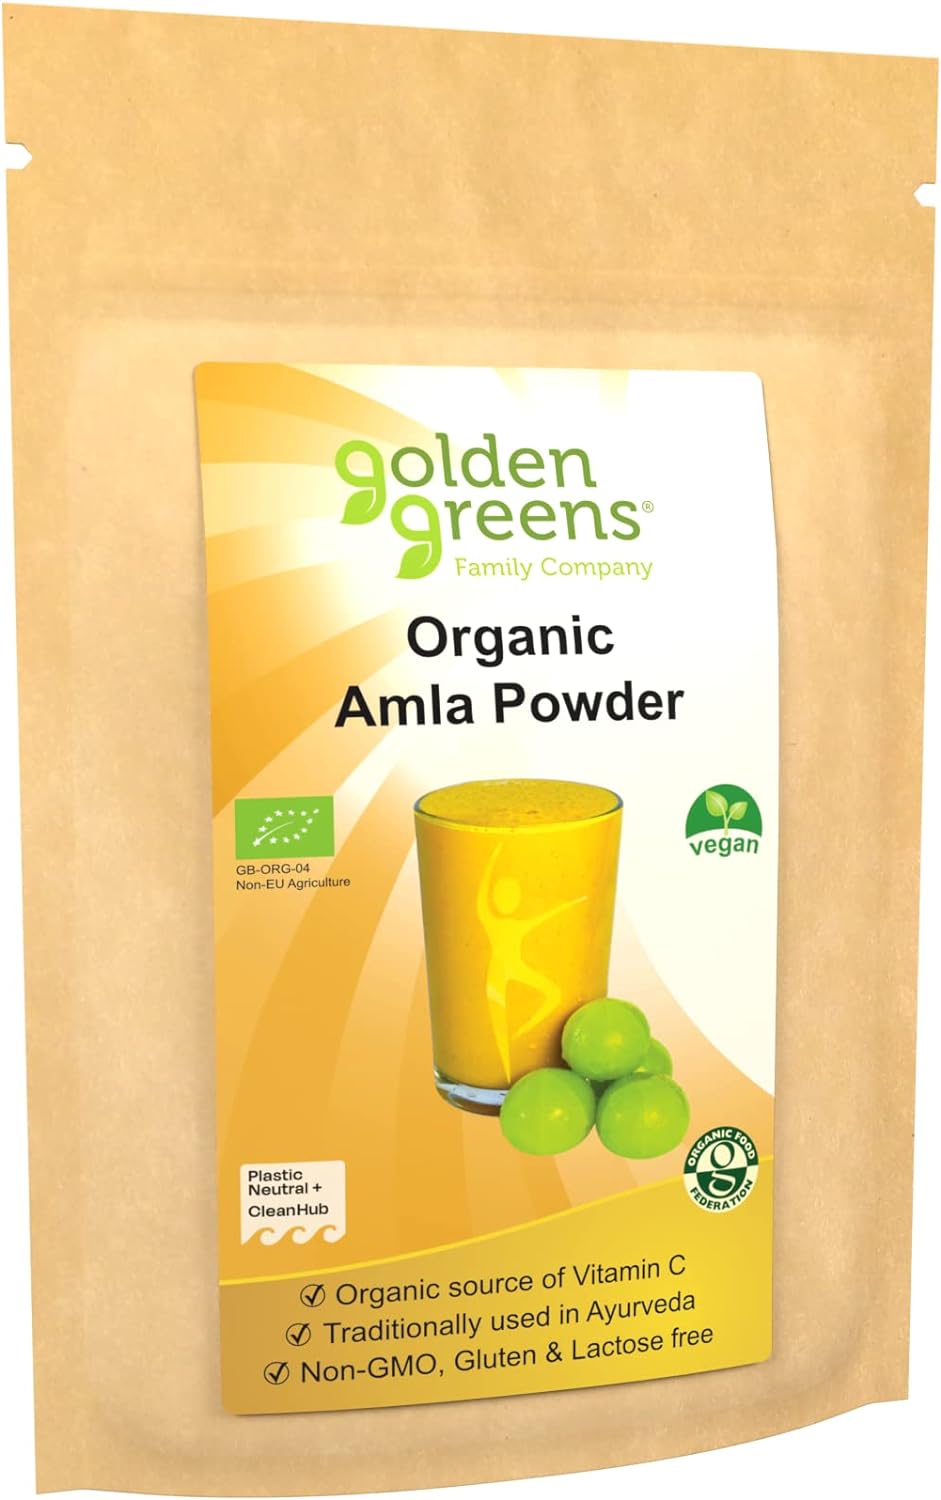 Golden Greens Organic Amla Powder 200g

31.75 Grams